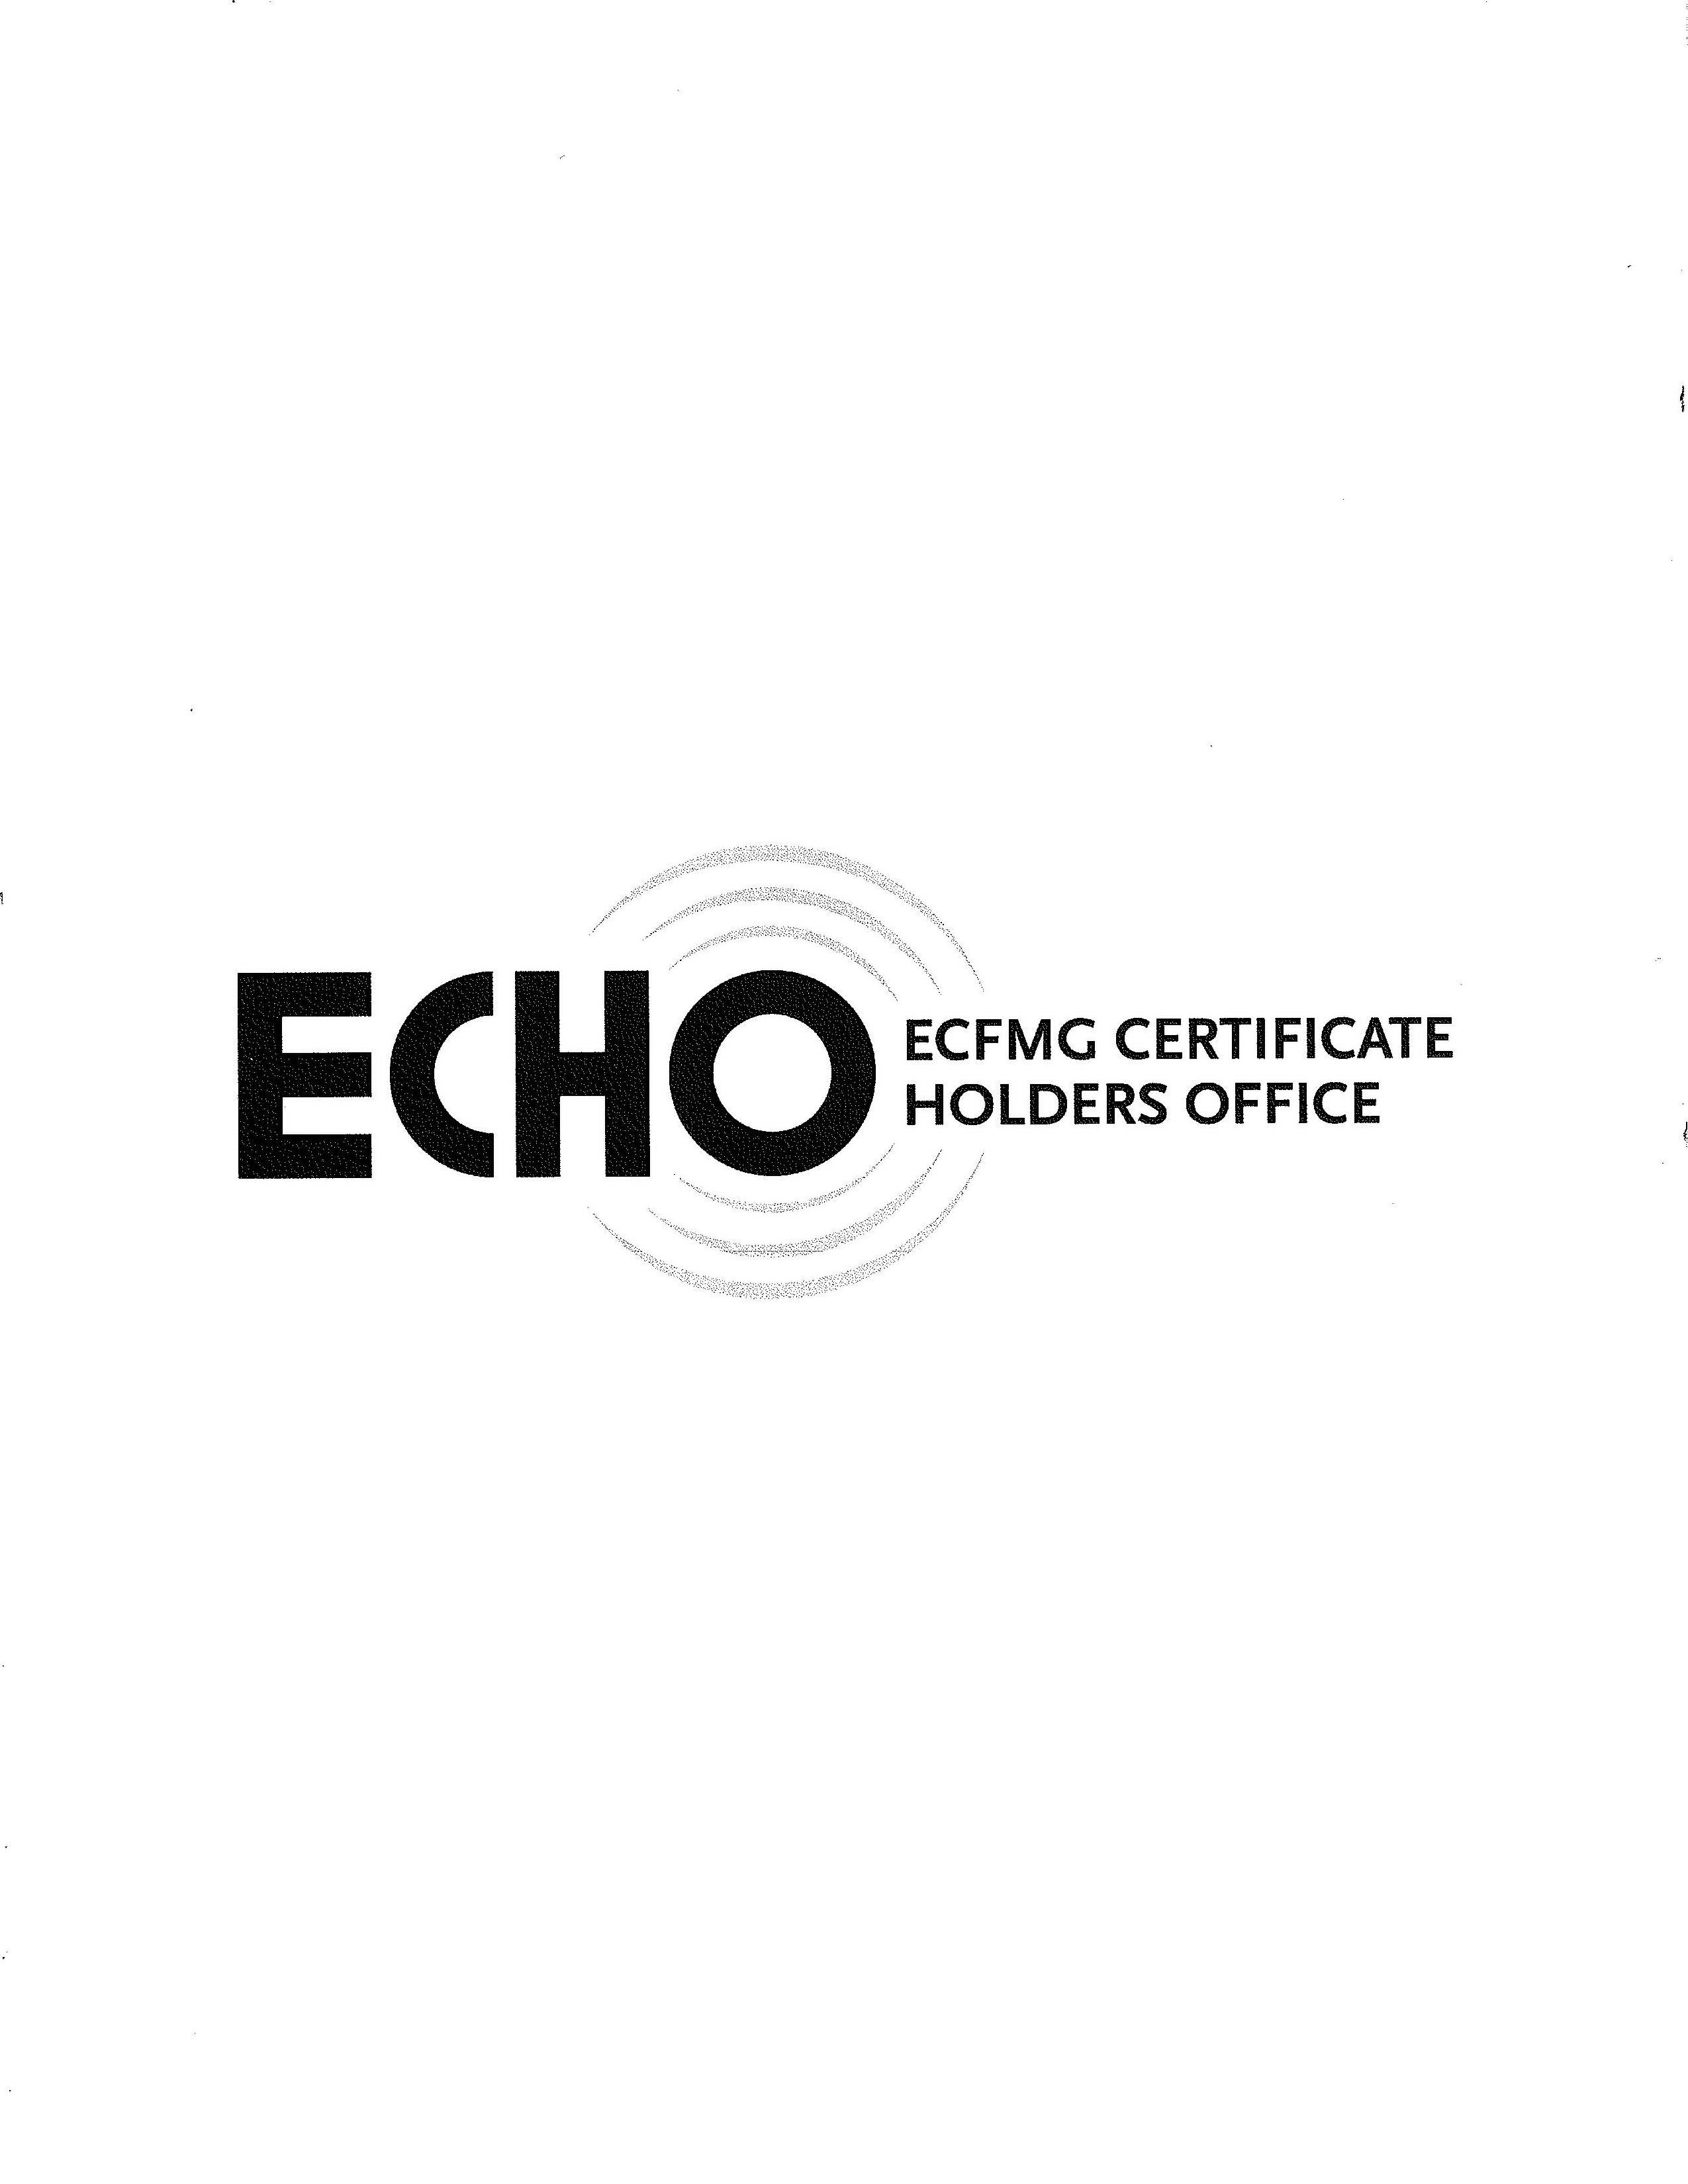  ECHO ECFMG CERTIFICATE HOLDERS OFFICE